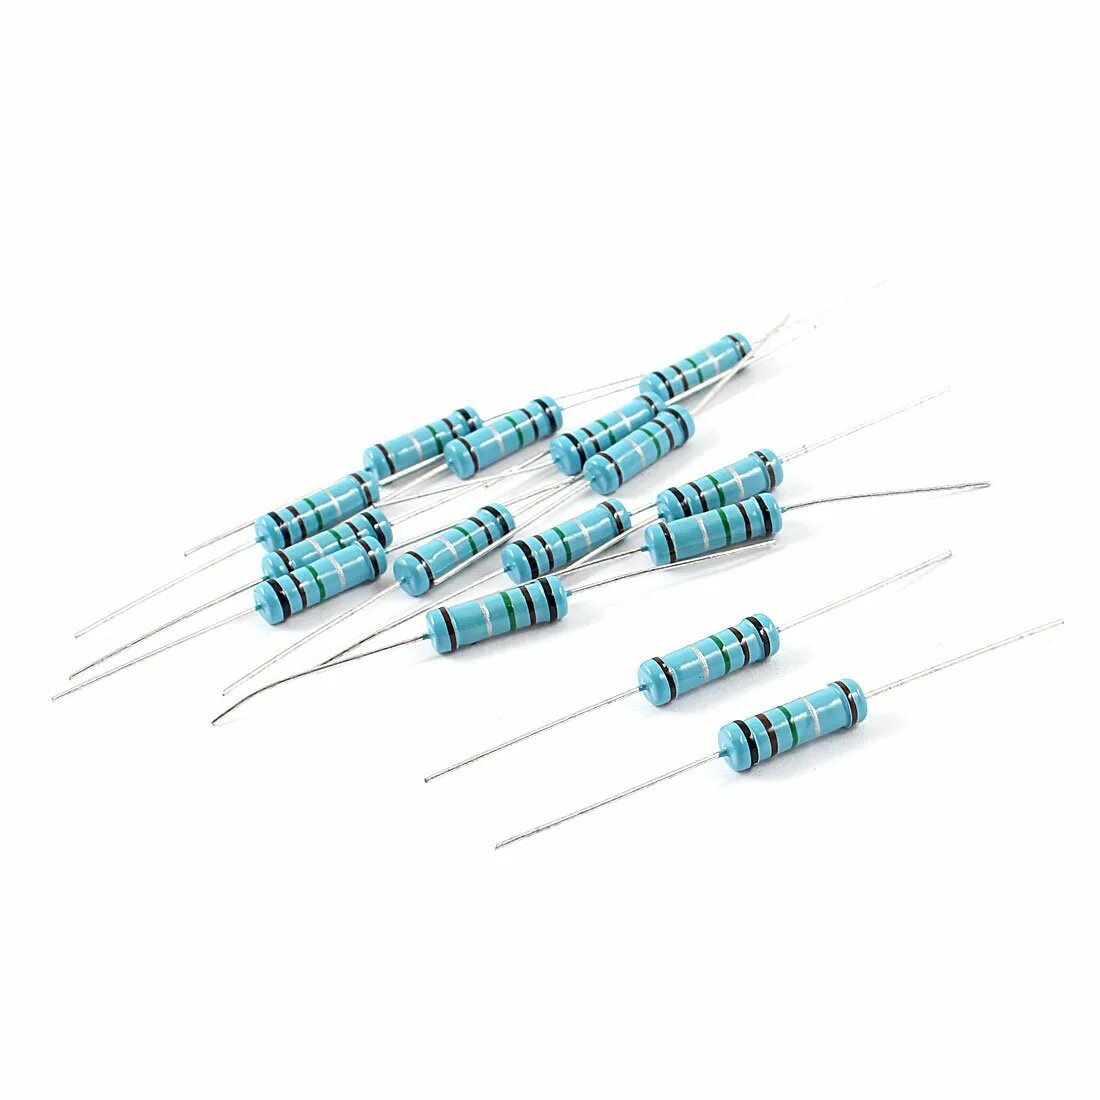 Резистор 0 36. Axial резистор. 0.2 Ом ± 1% 2w 5 полосок. R_Axial-0.3. КПР 3.0 резистор.